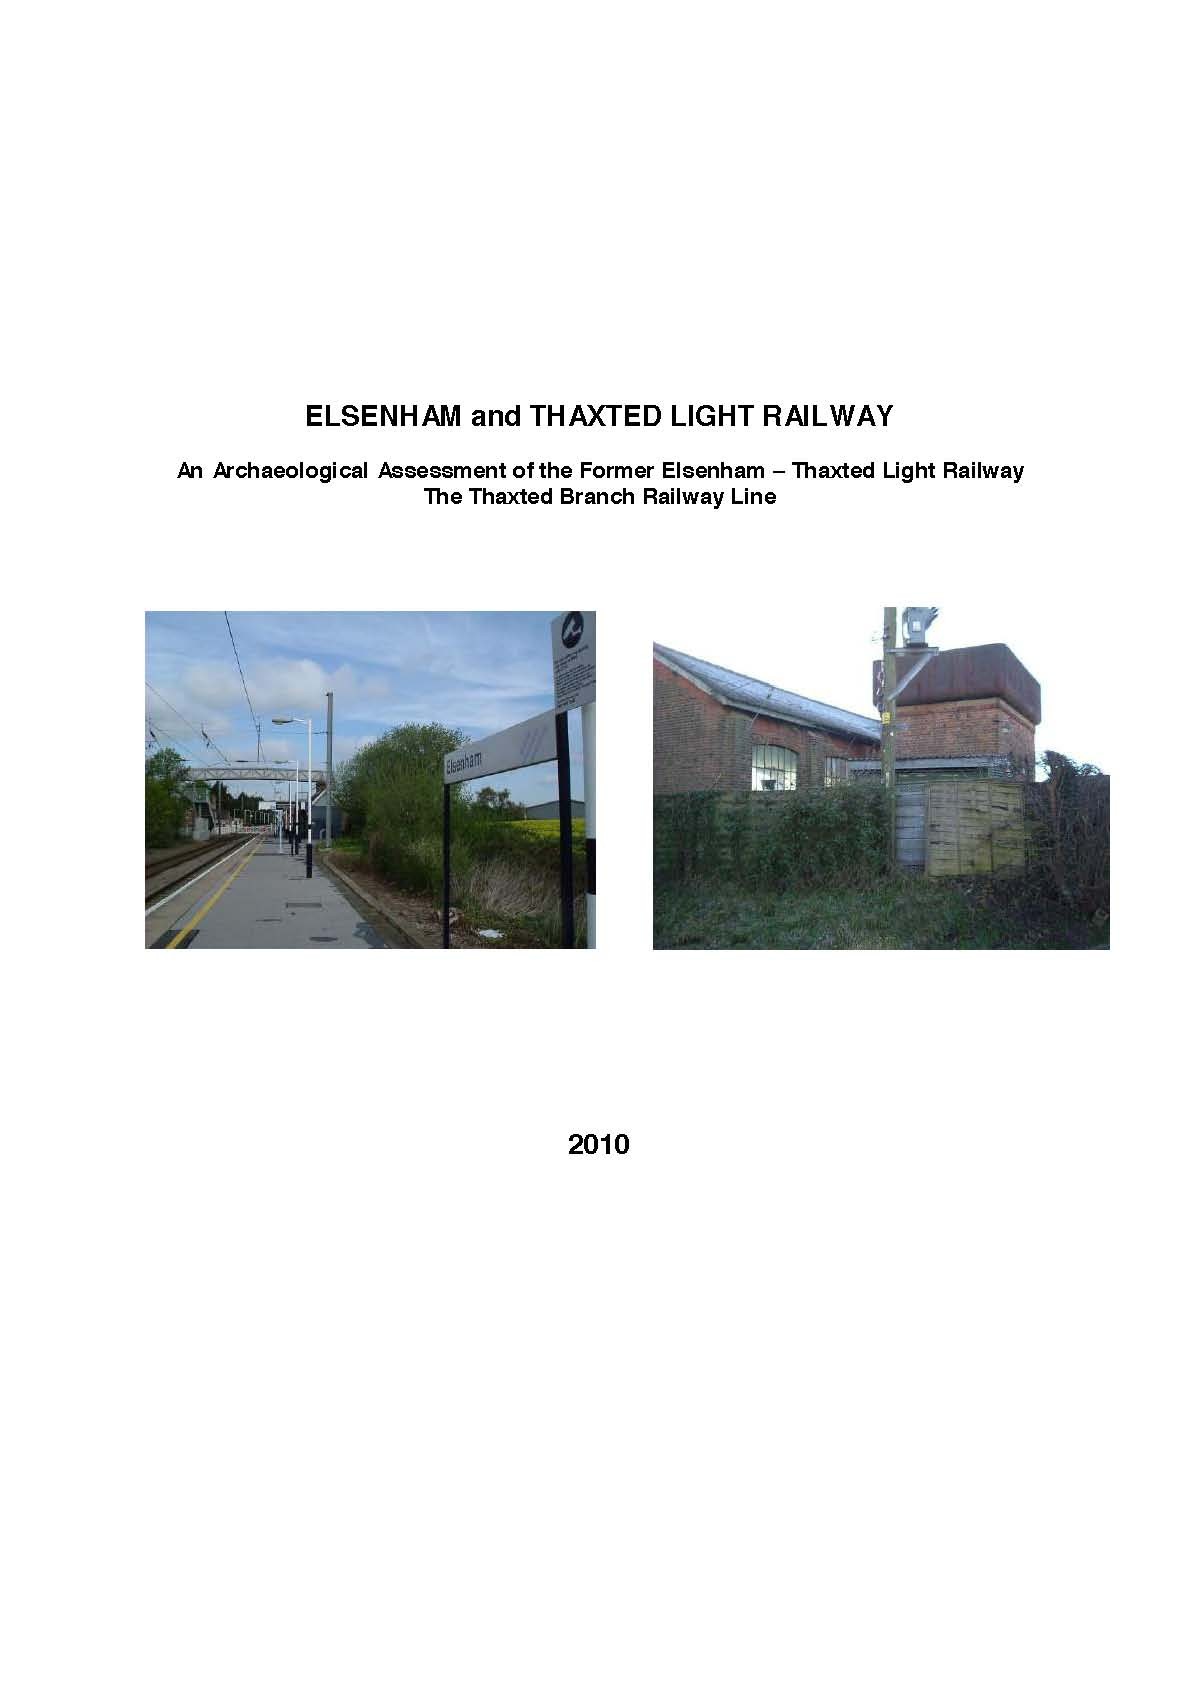 Elsenham and Thaxted Light Railway (2010) eiag illustration 1